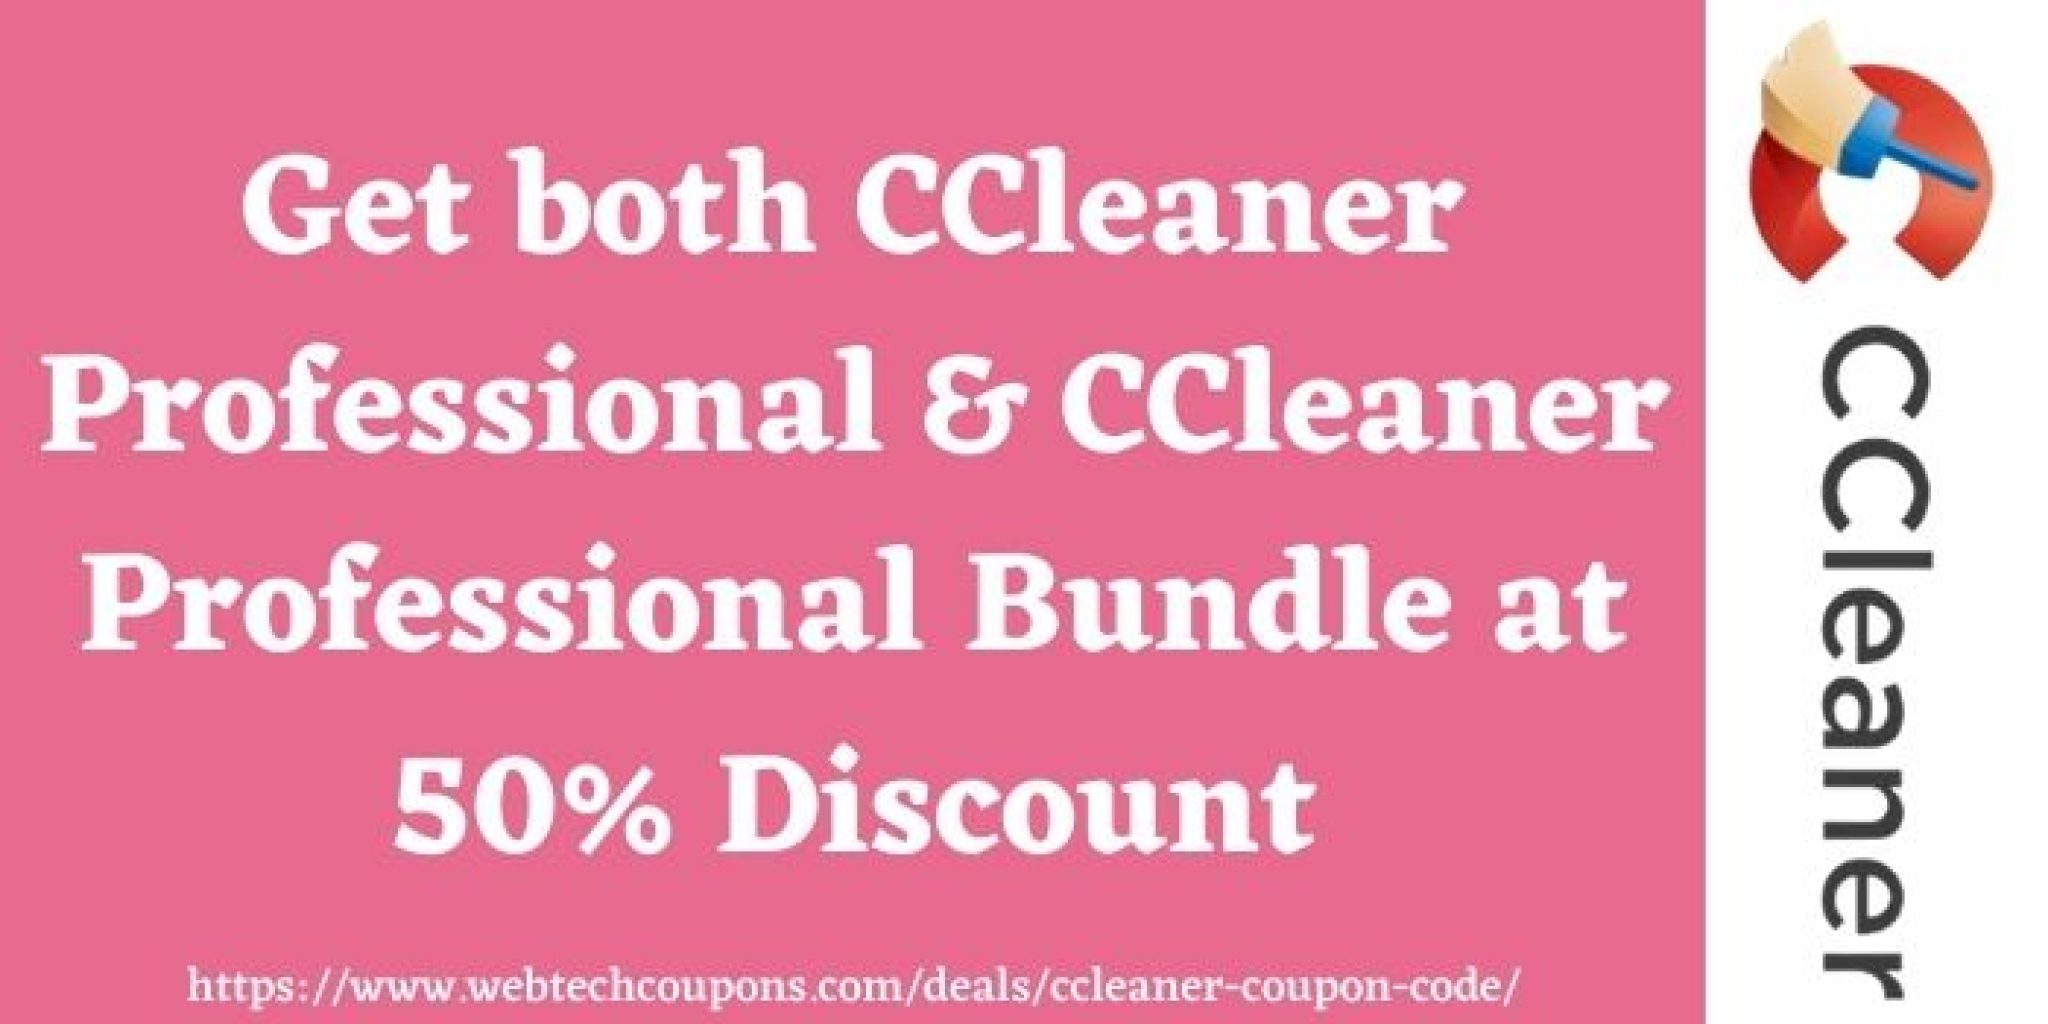 ccleaner discount code